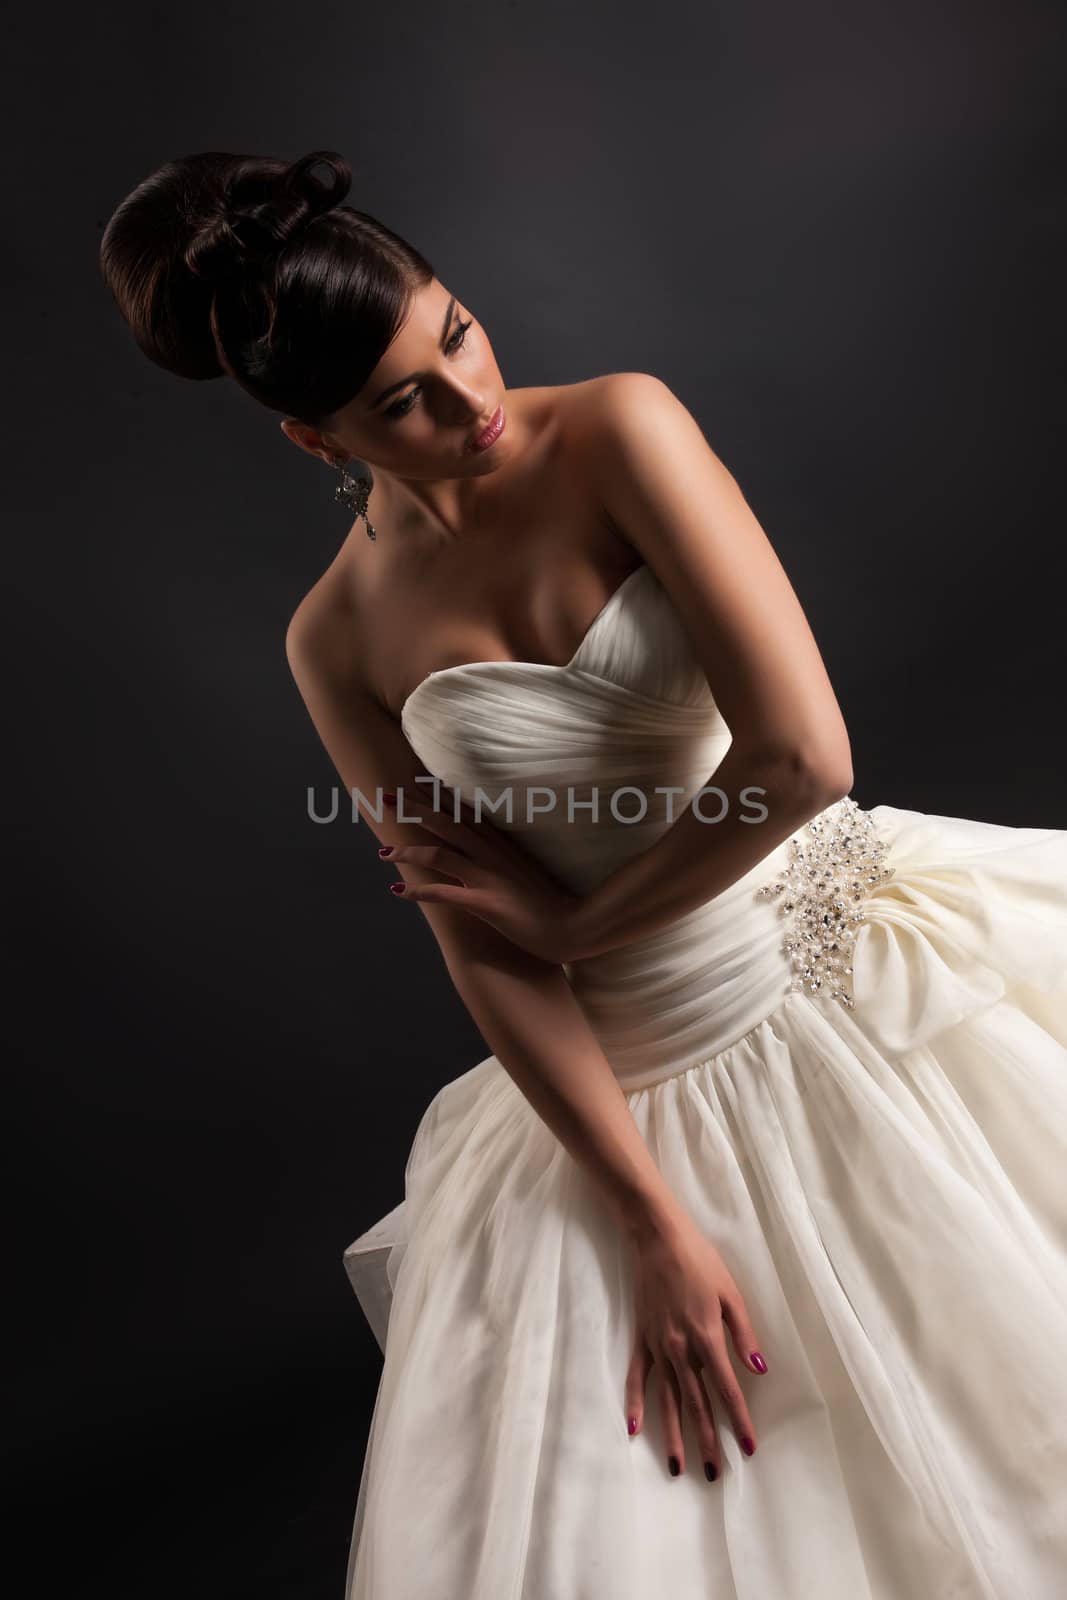 Young Beautiful Bride by Fotoskat